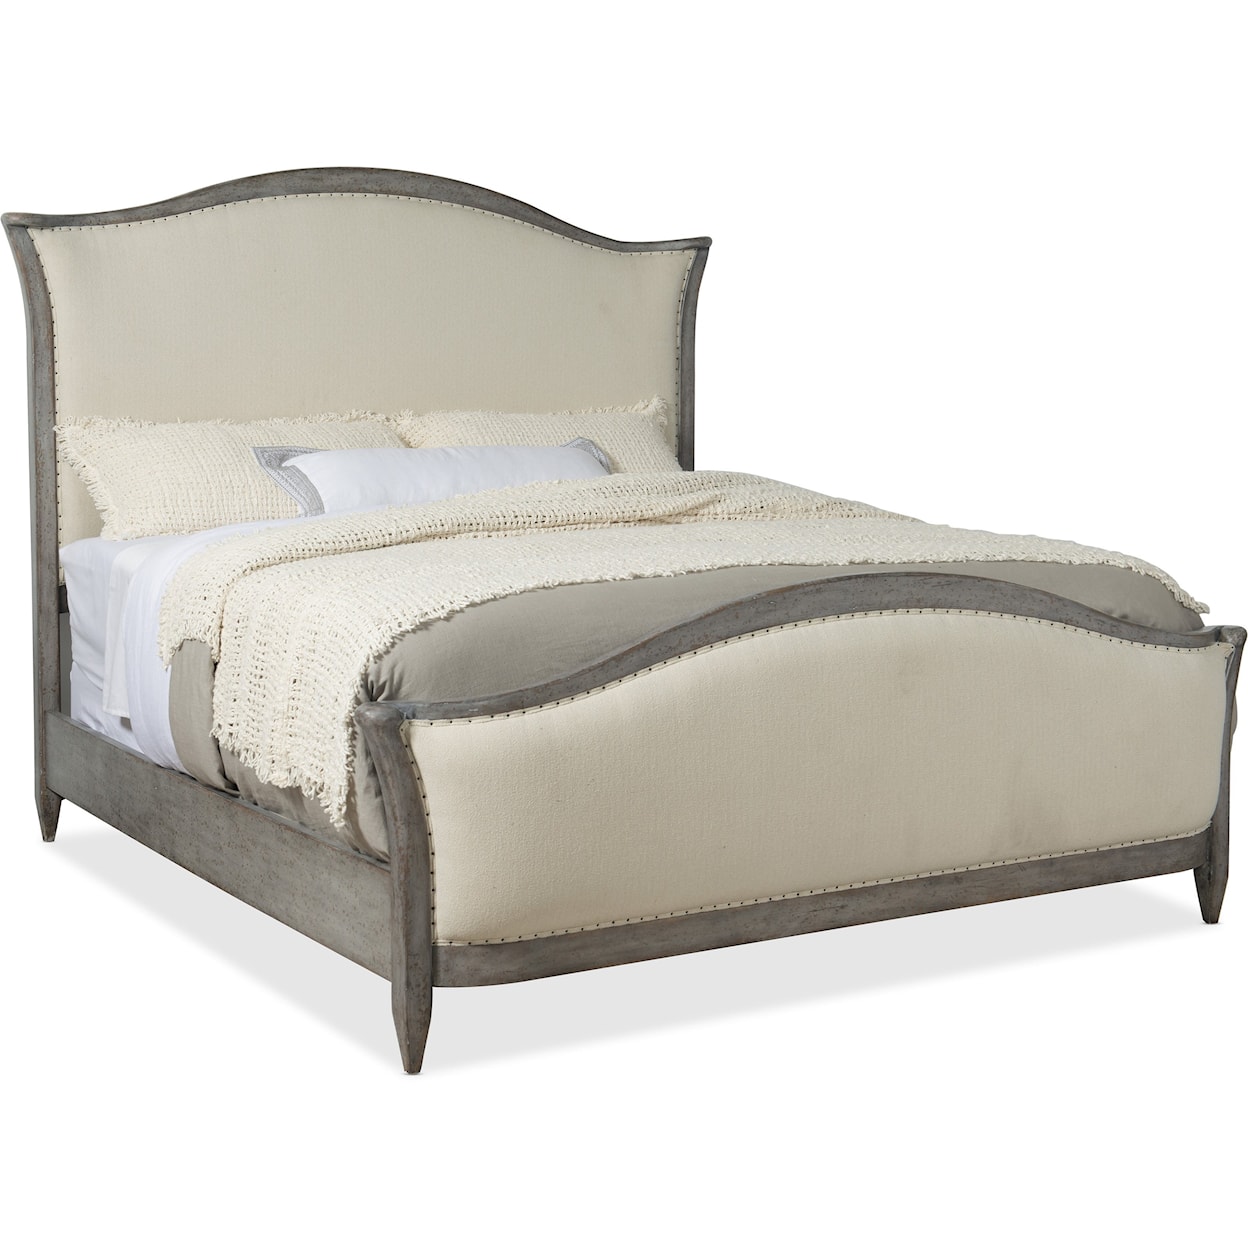 Hooker Furniture Ciao Bella King Upholstered Bed